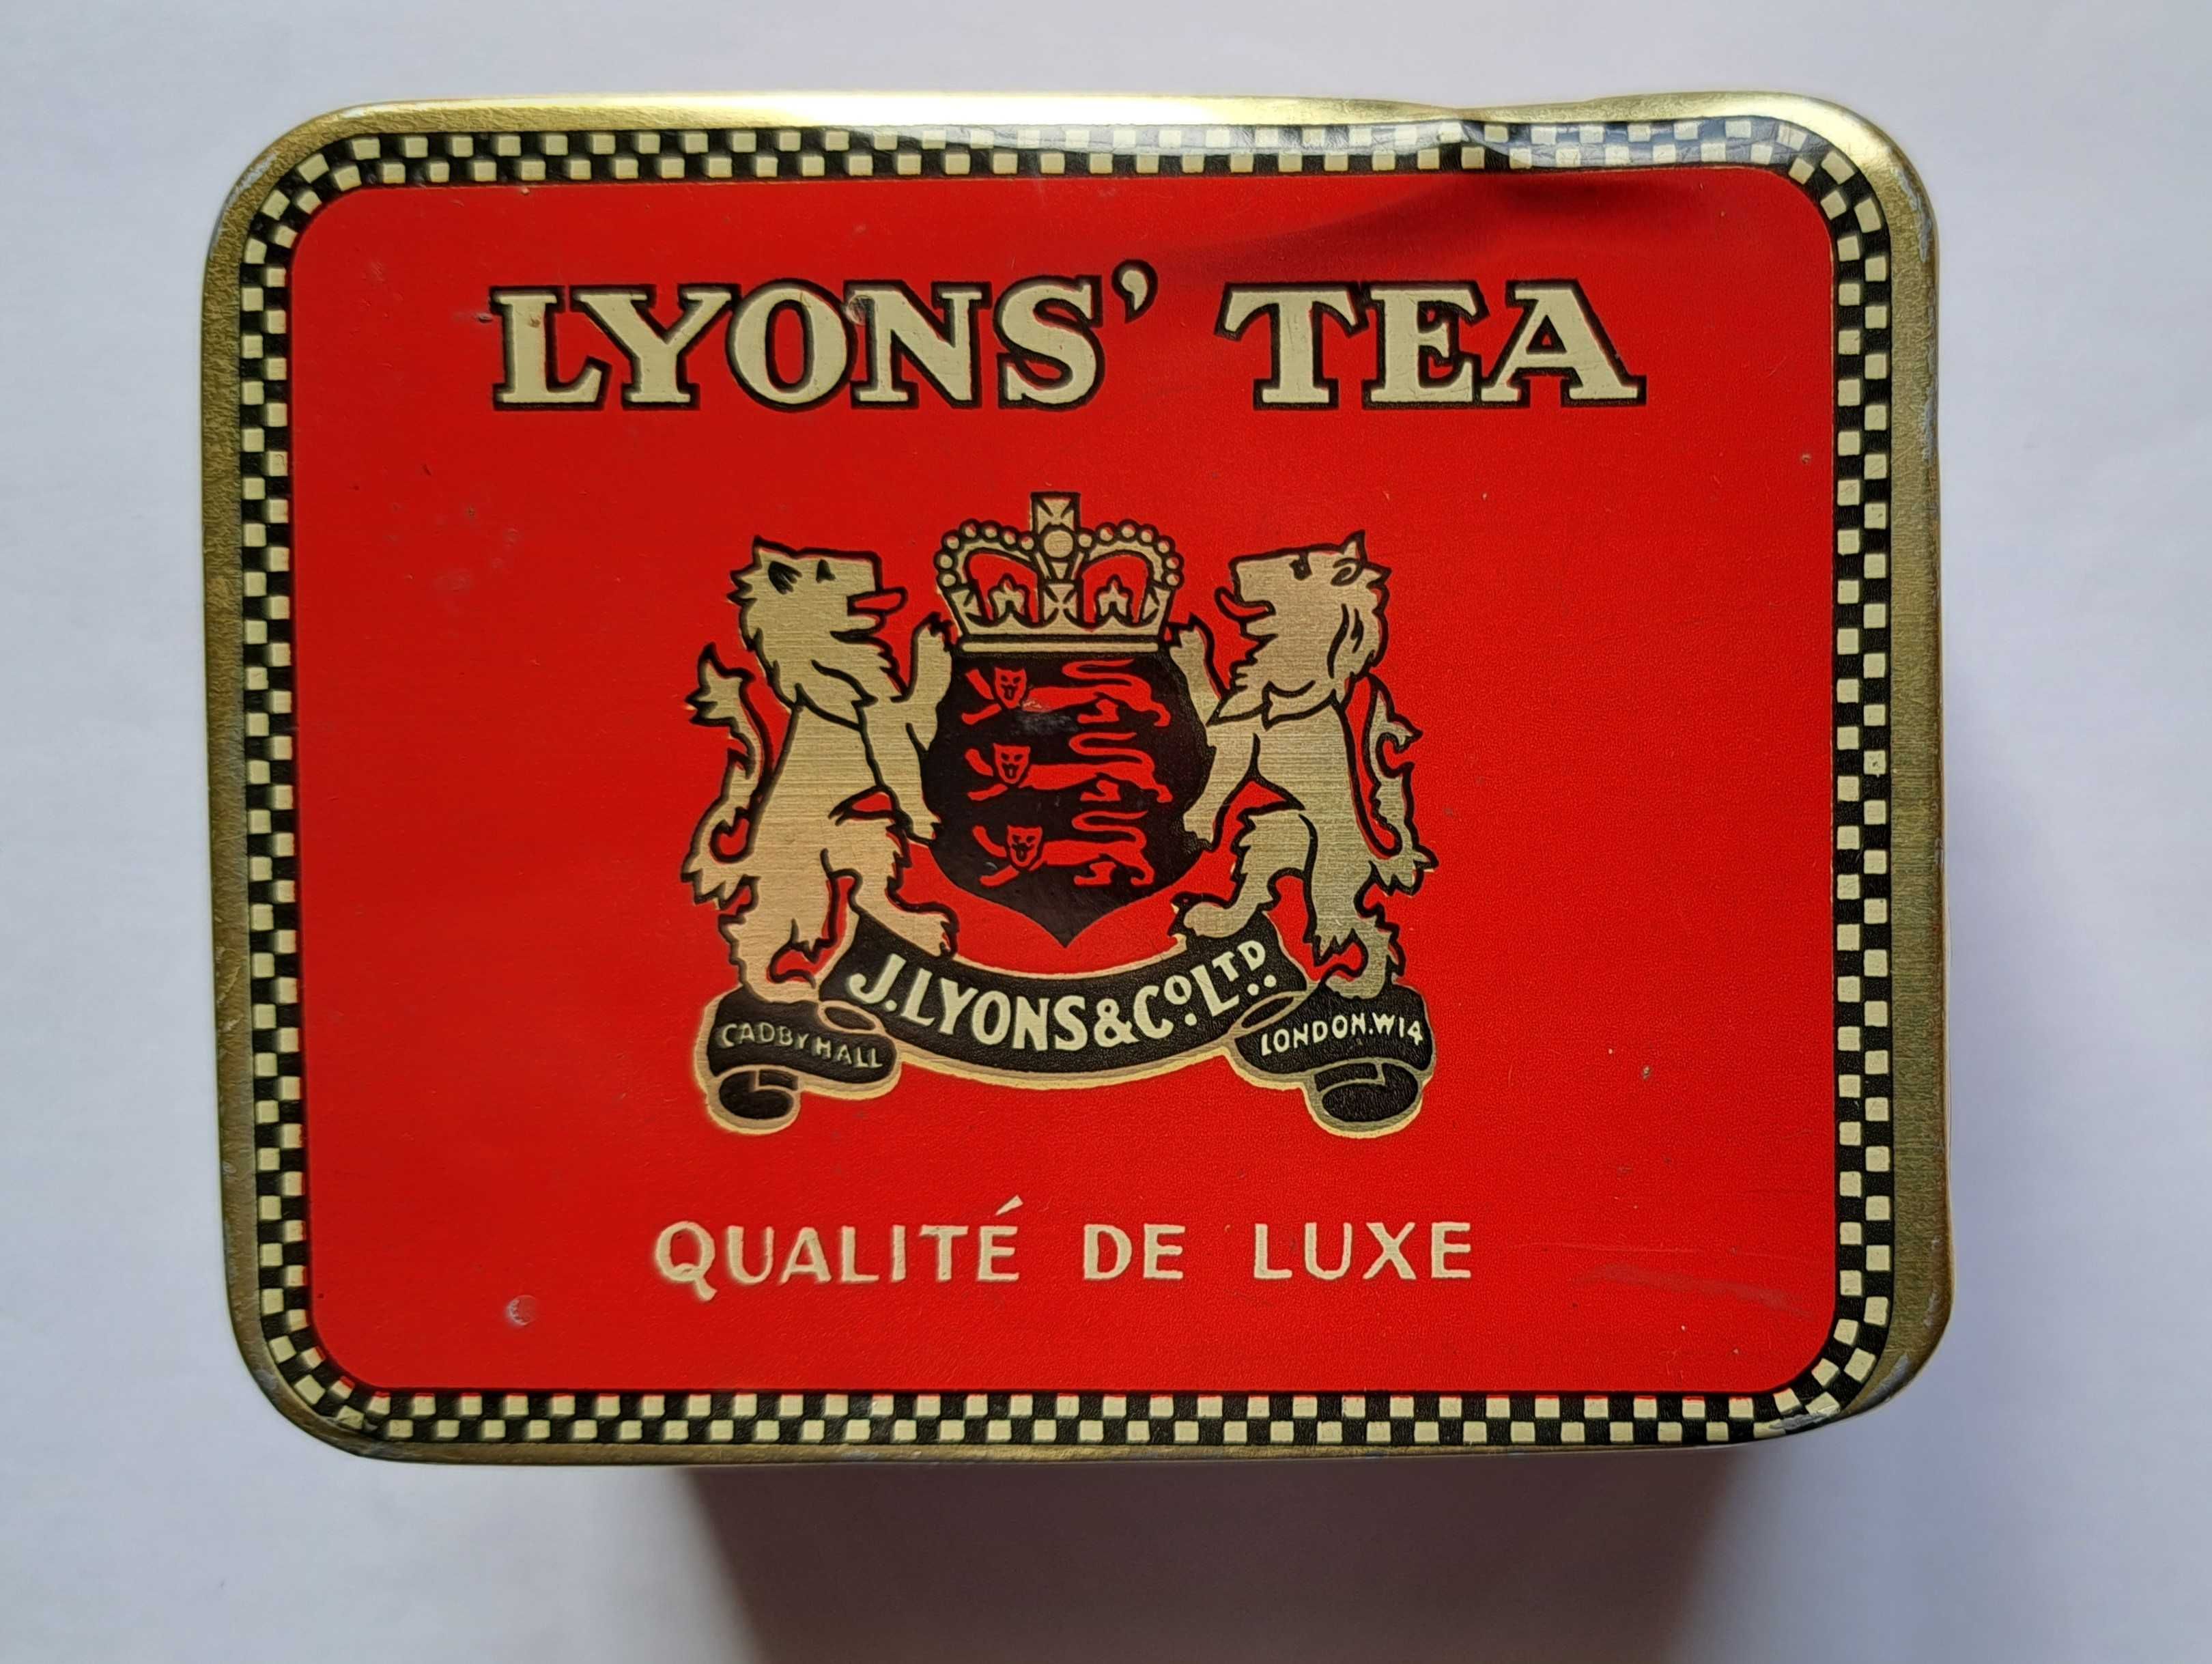 Stare pudełko po herbacie  firmy Lyons' Tea - Anglia